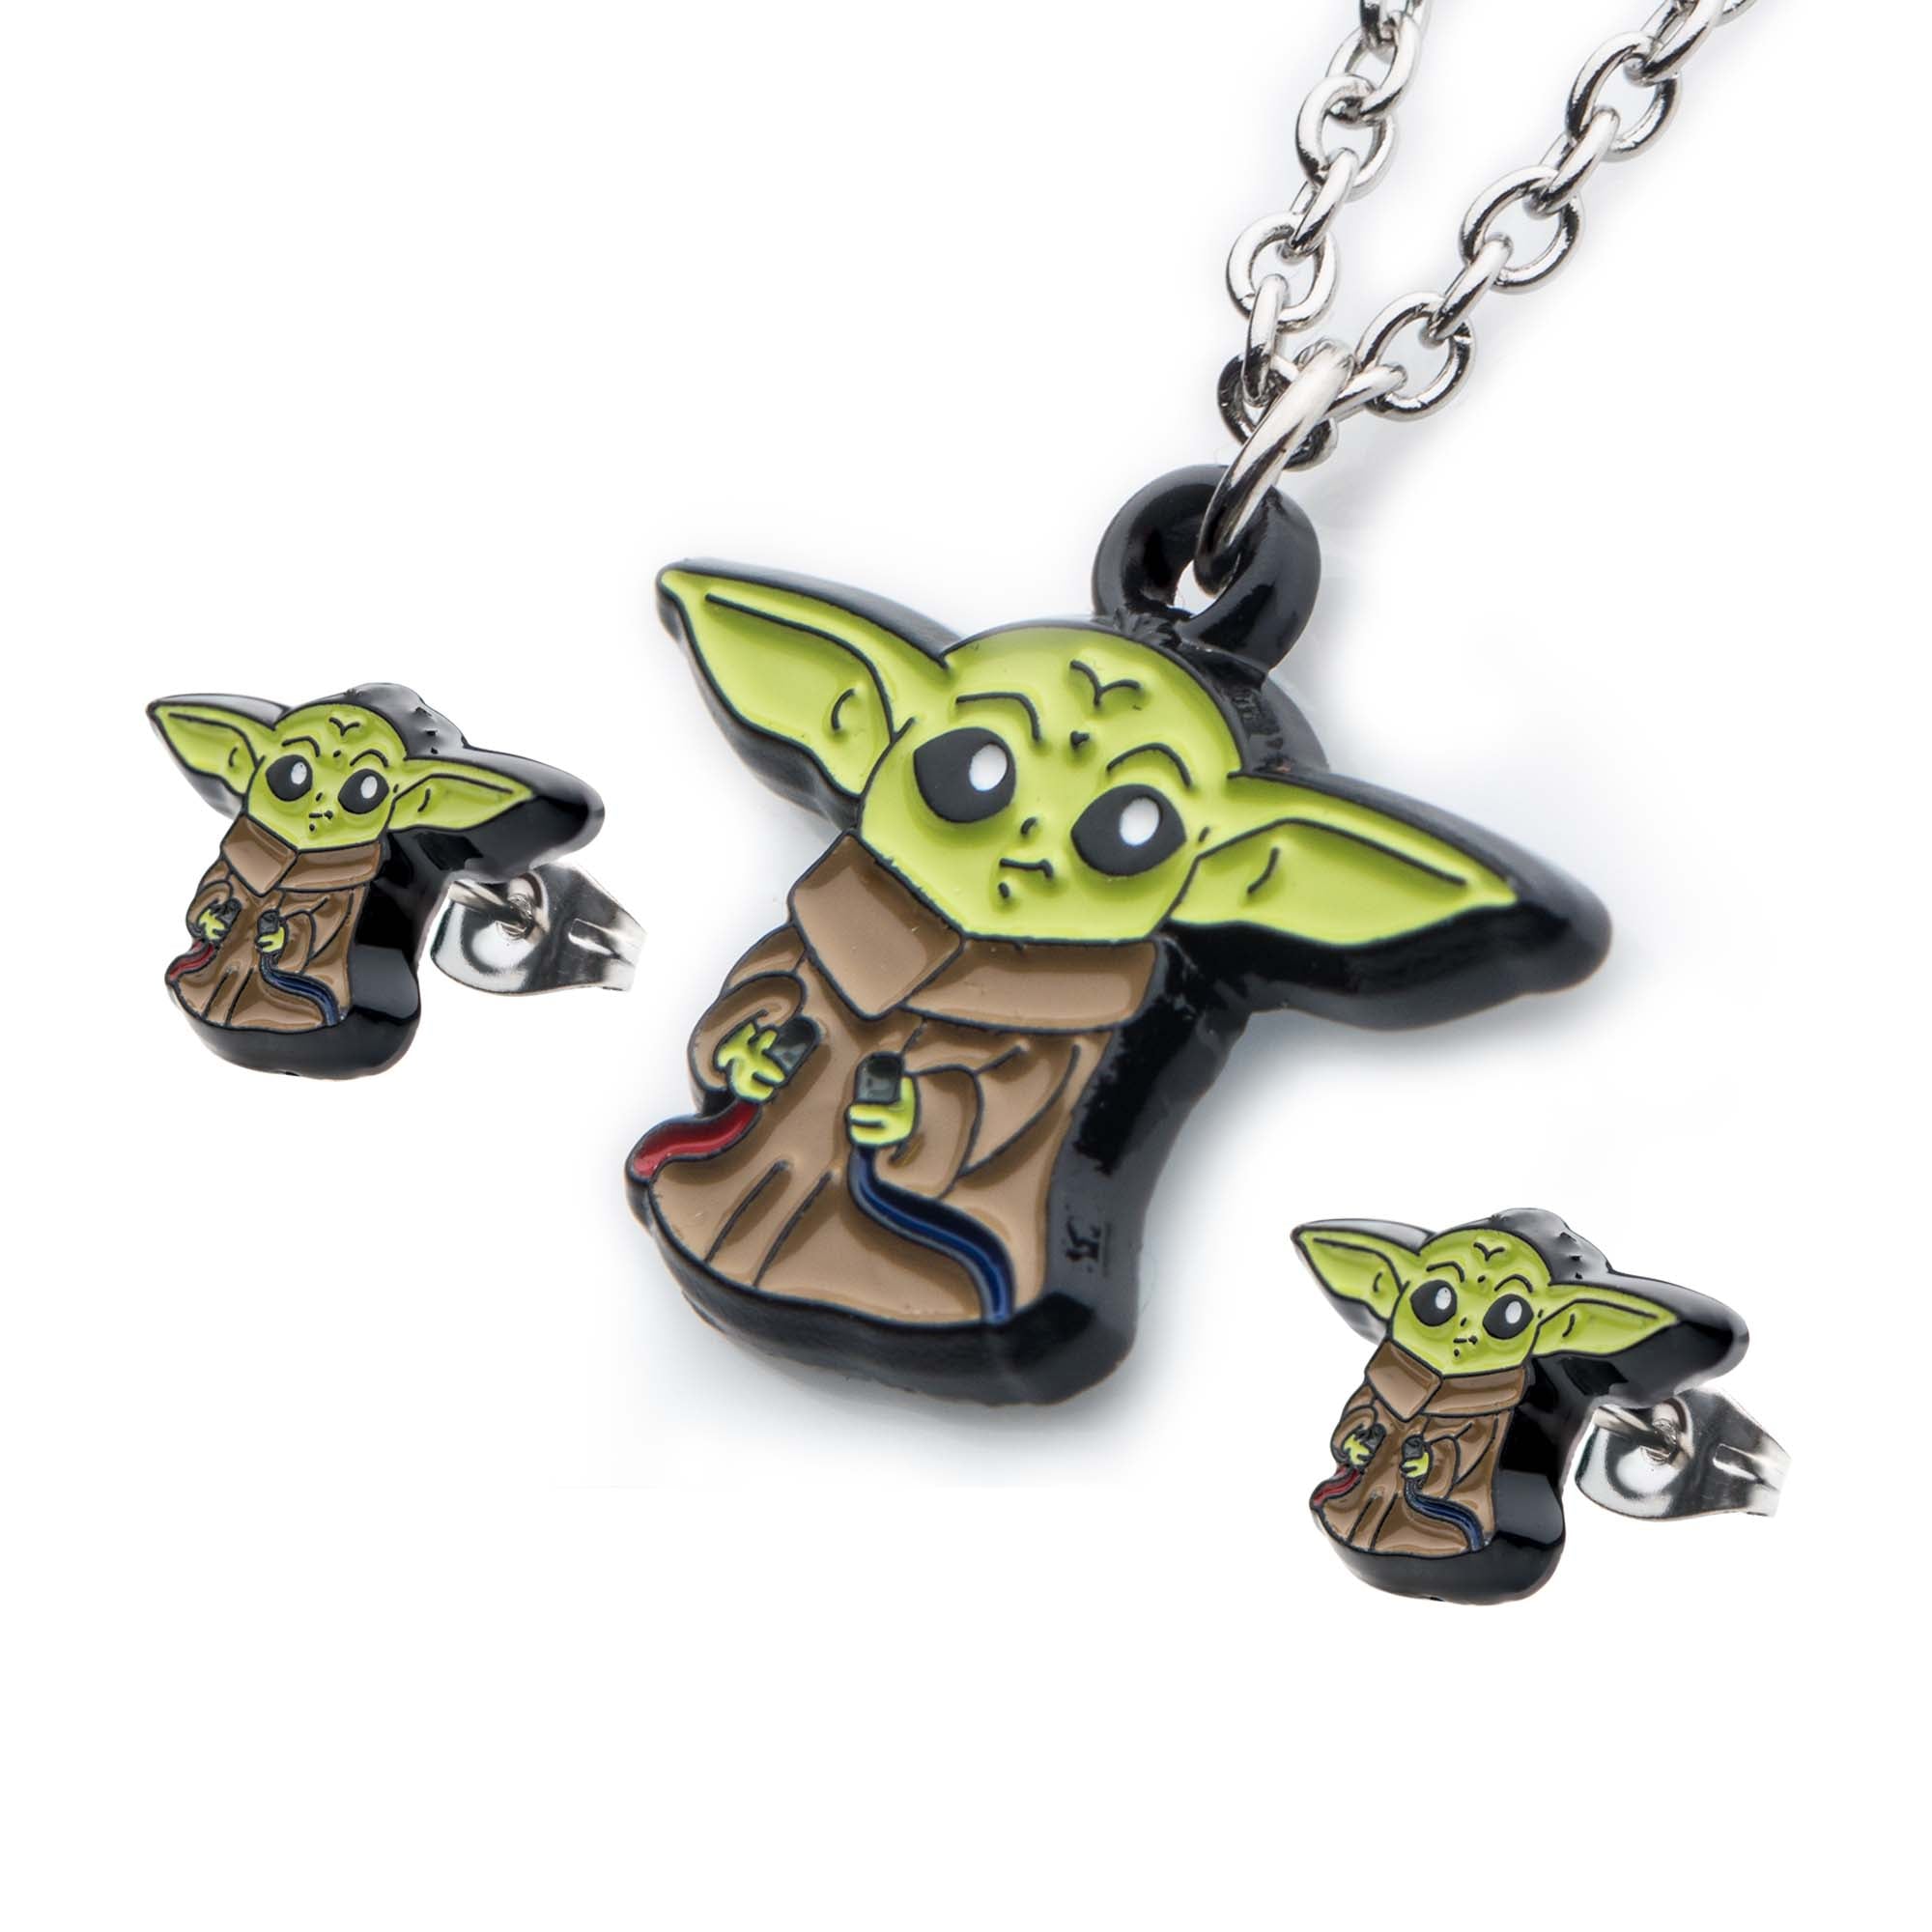 Star Wars: The Mandalorian Grogu (AKA: Baby Yoda/ The Child) Necklace And Earring Set